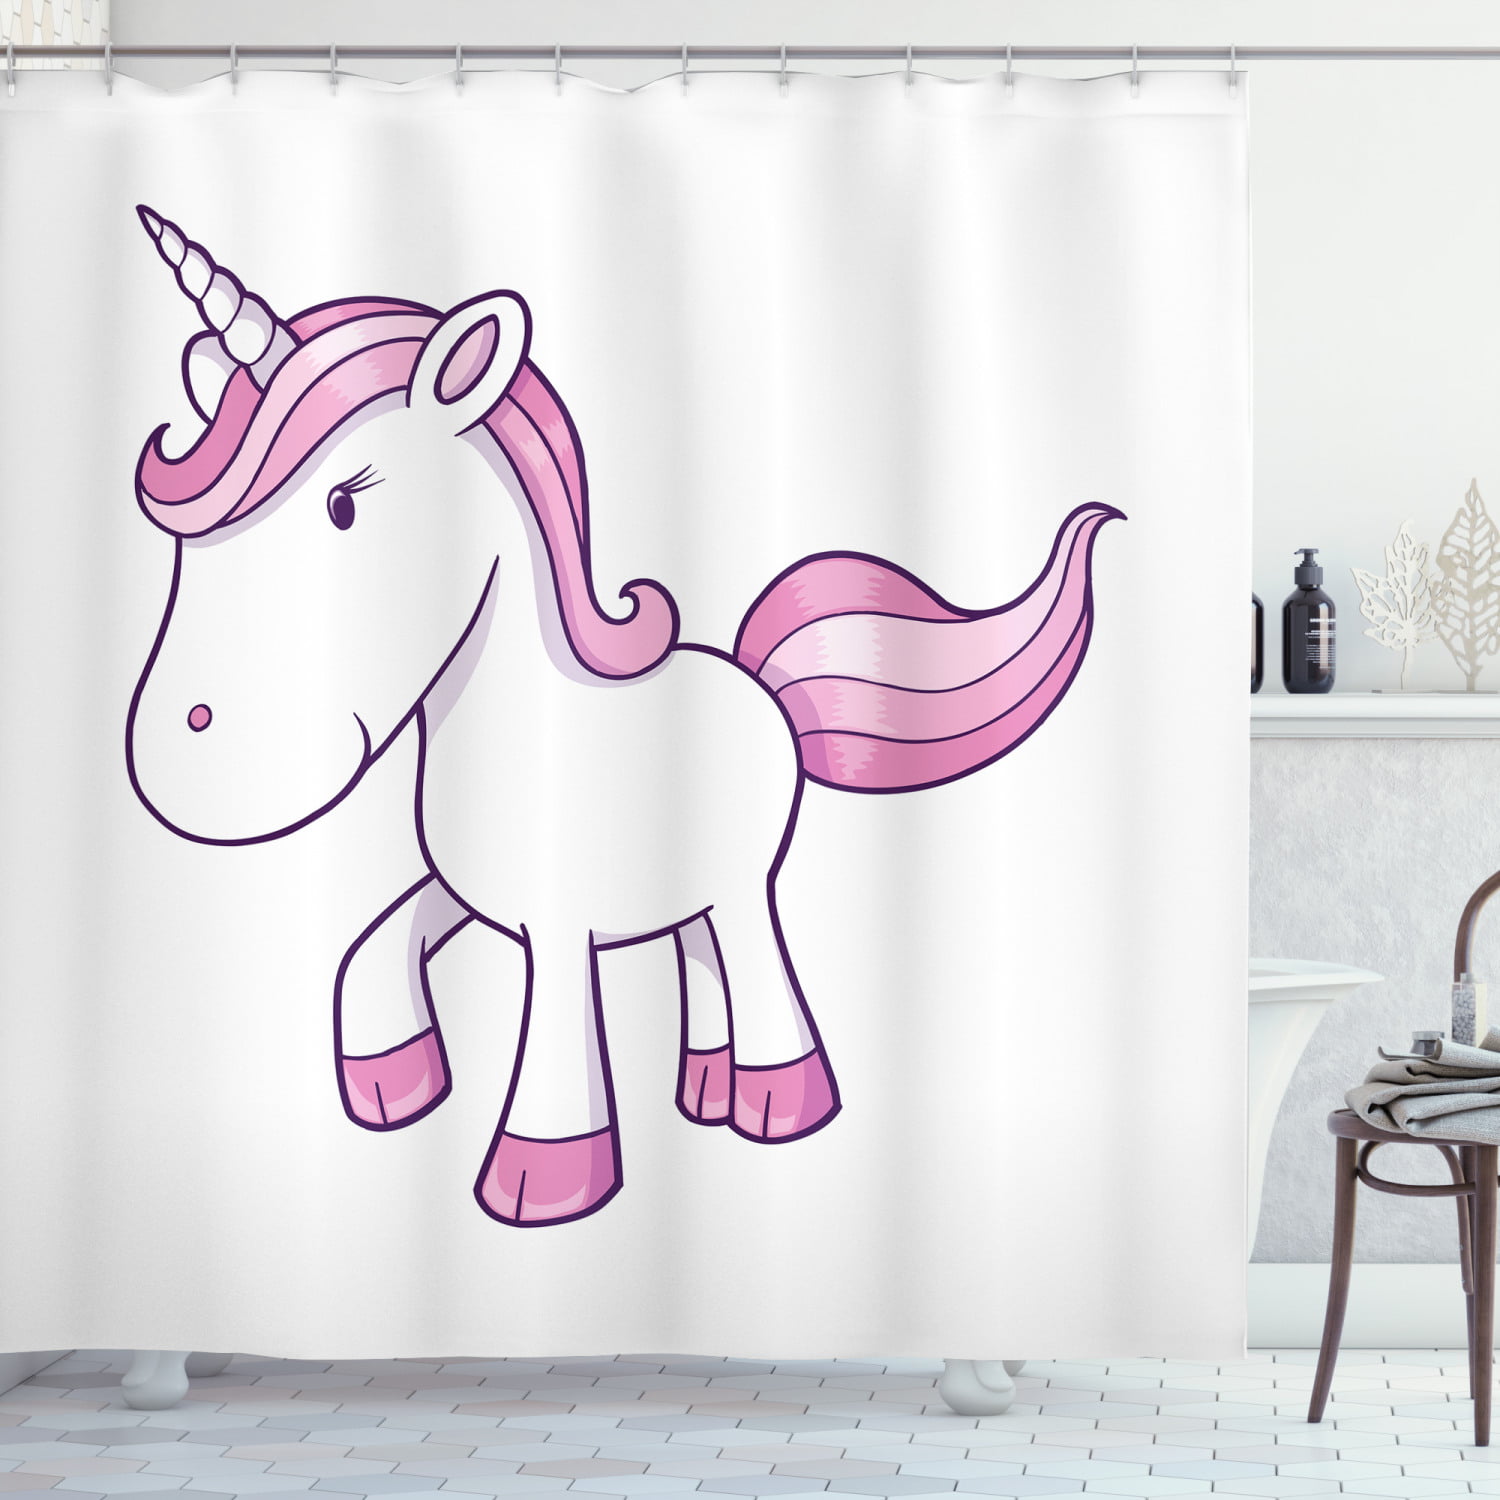 100% Polyester Fabric Unicorn Colored Horn Shower Curtain Bathroom Set Hooks 